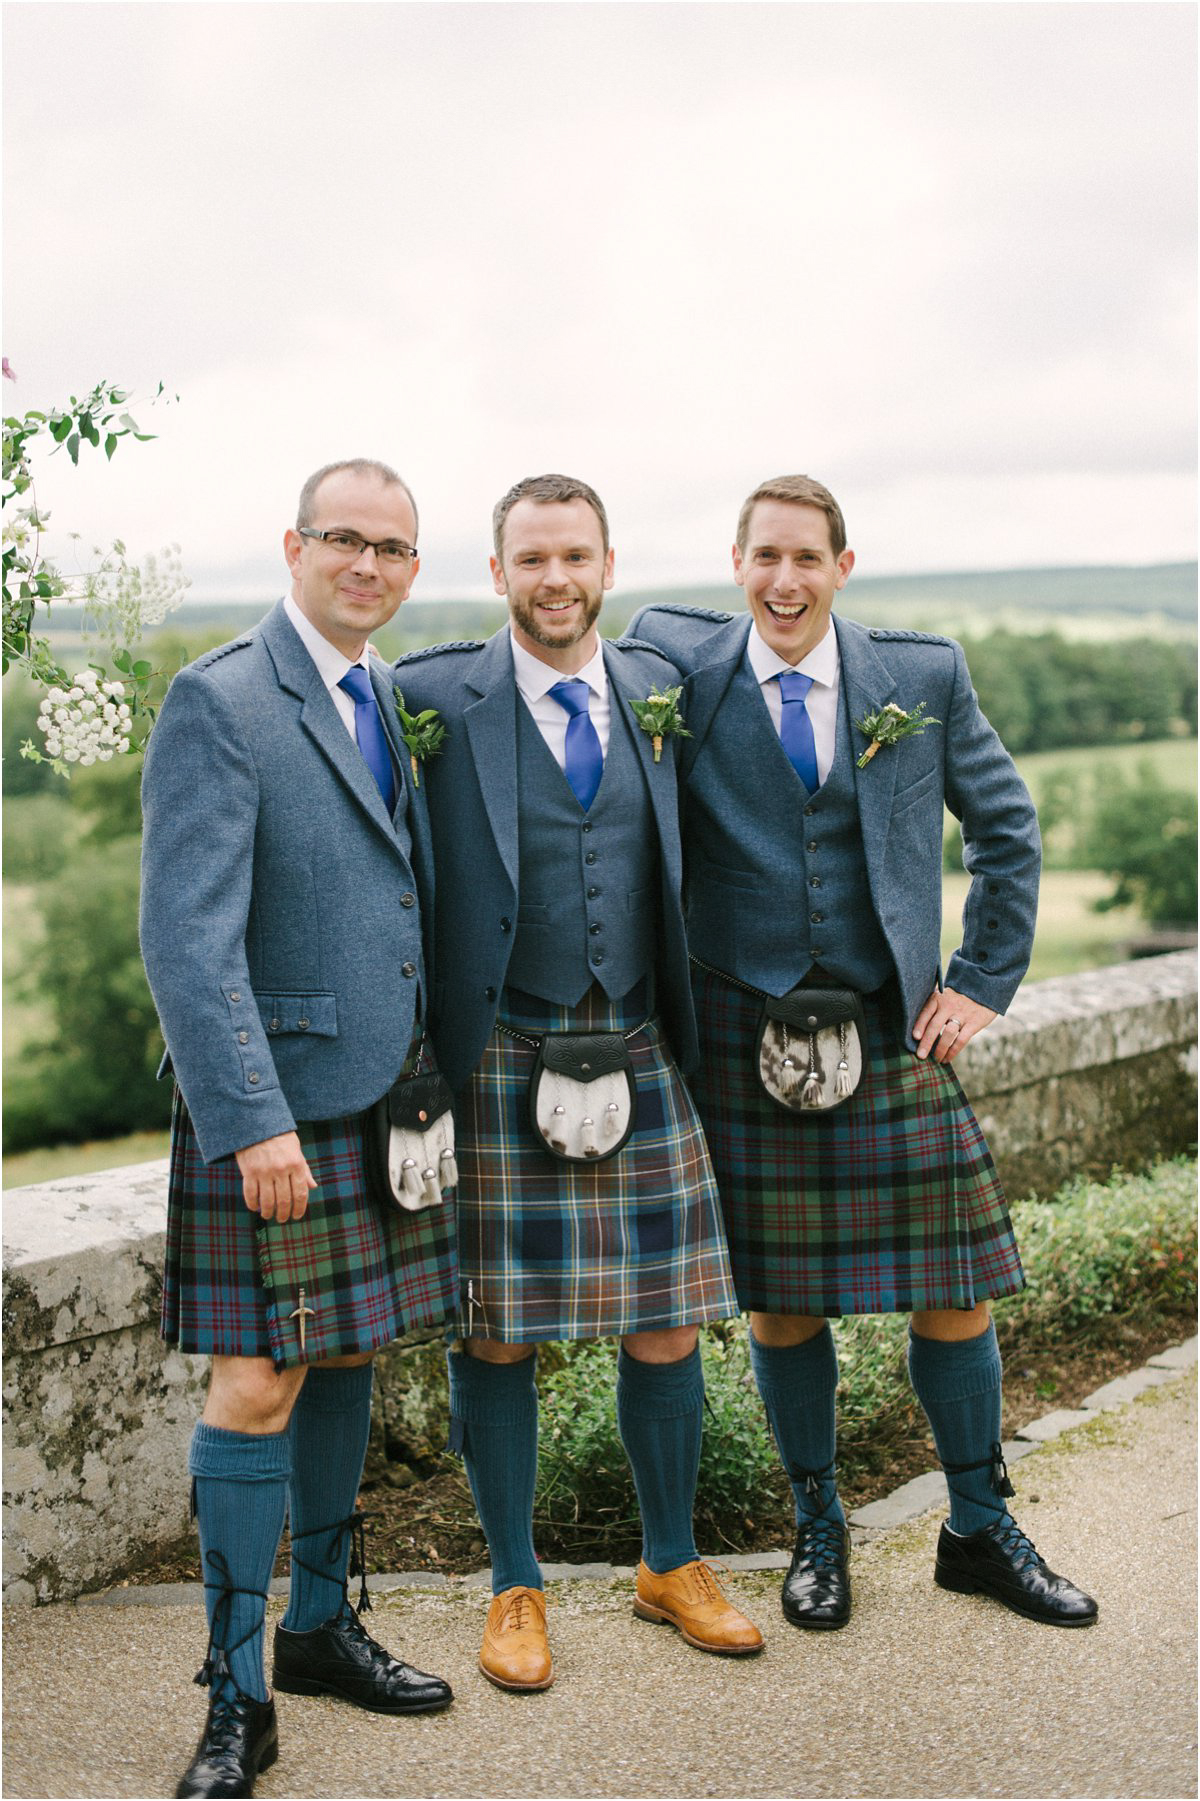 Romantic Scottish castle wedding | Scotland wedding photographer ...